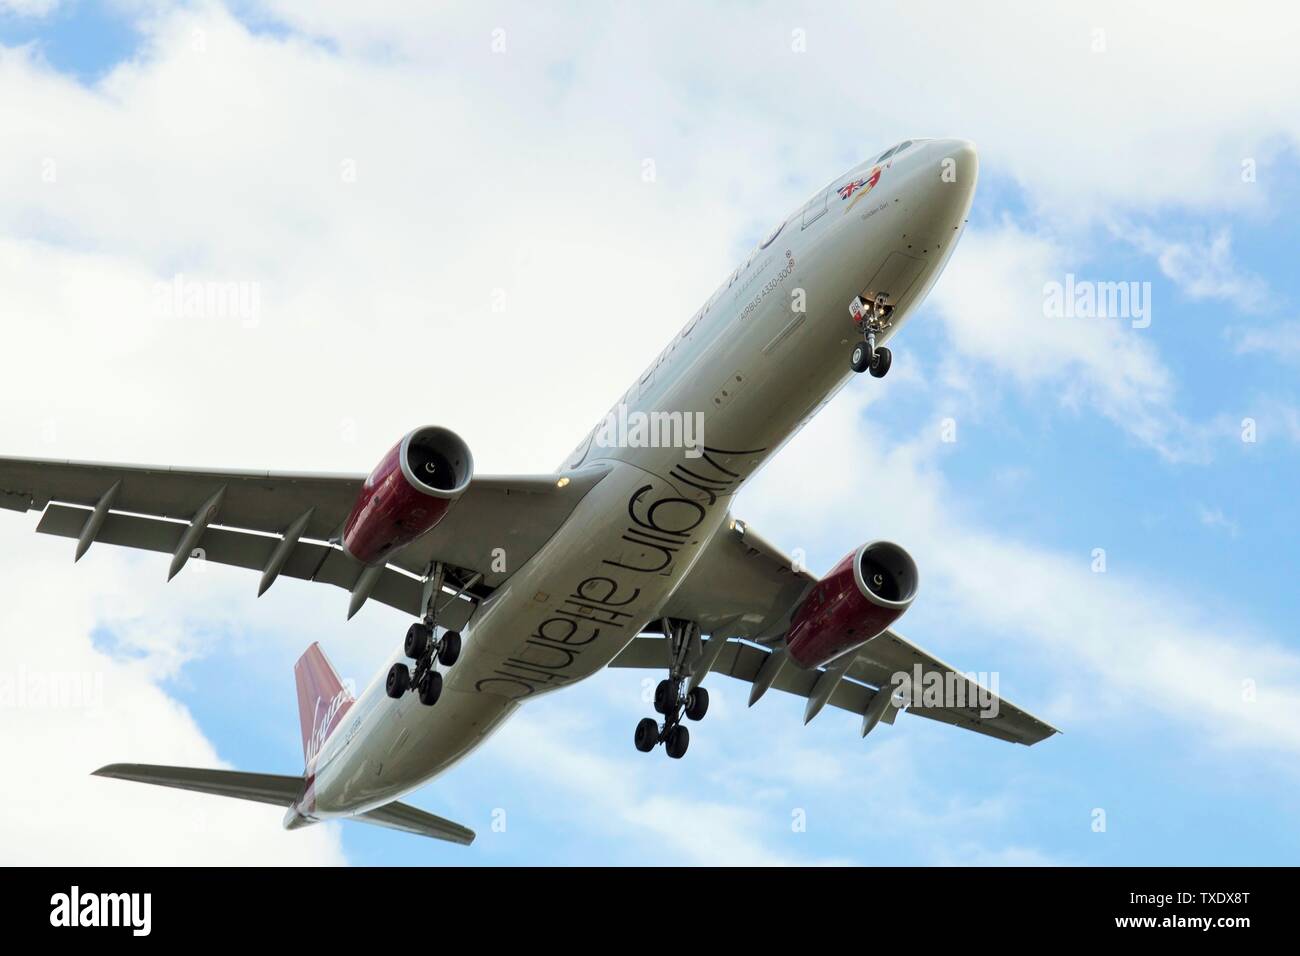 Virgin Atlantic Airlines aeroplane landing at Heathrow Airport, London, UK Stock Photo